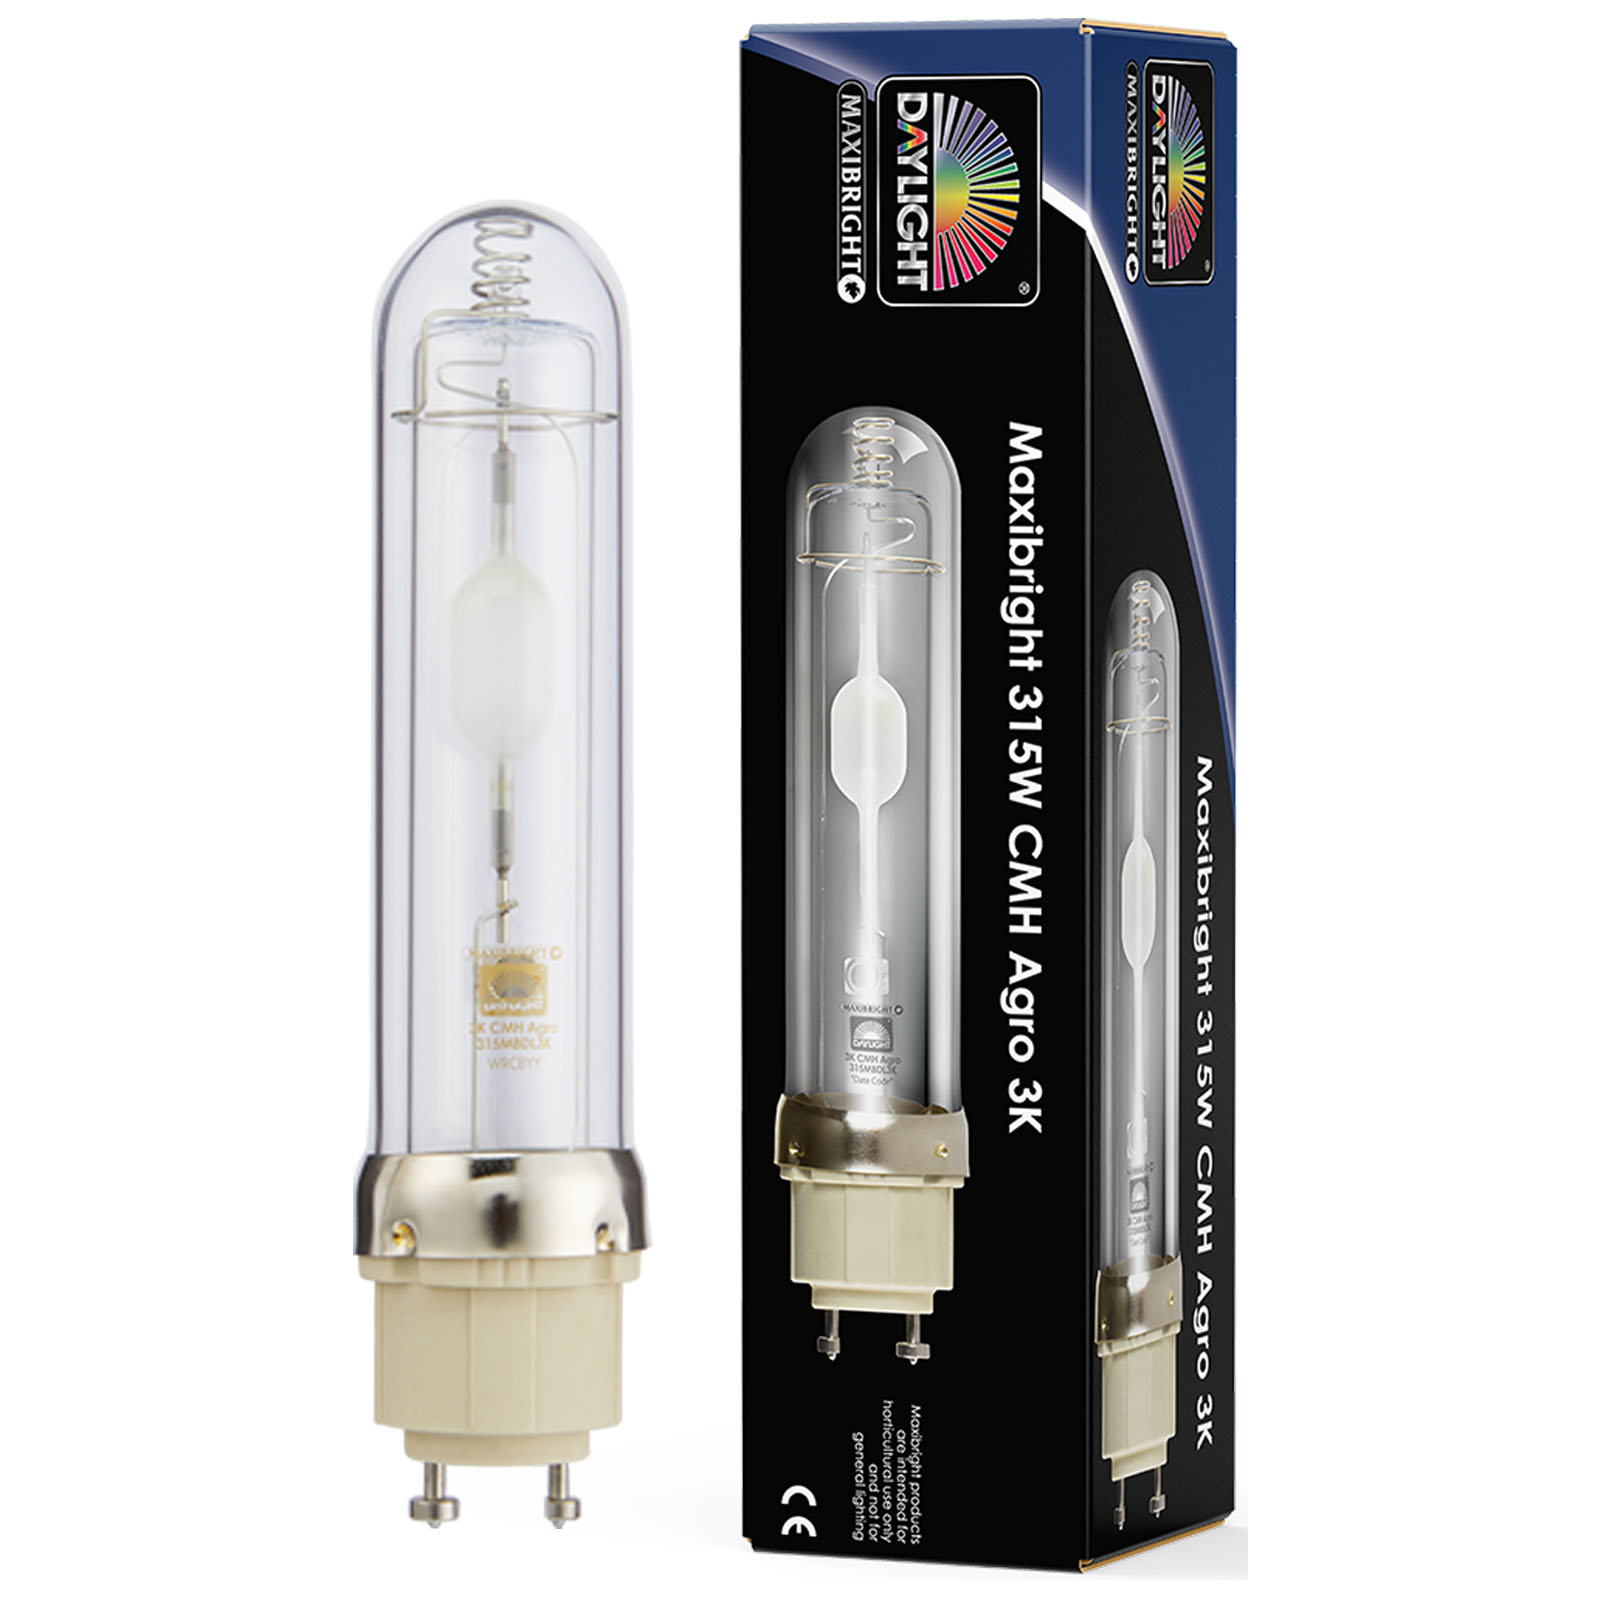 DAYLIGHT 600W CMH Agro 3K Grow Light Bulb Maxibright Hydroponics Full Spectrum 